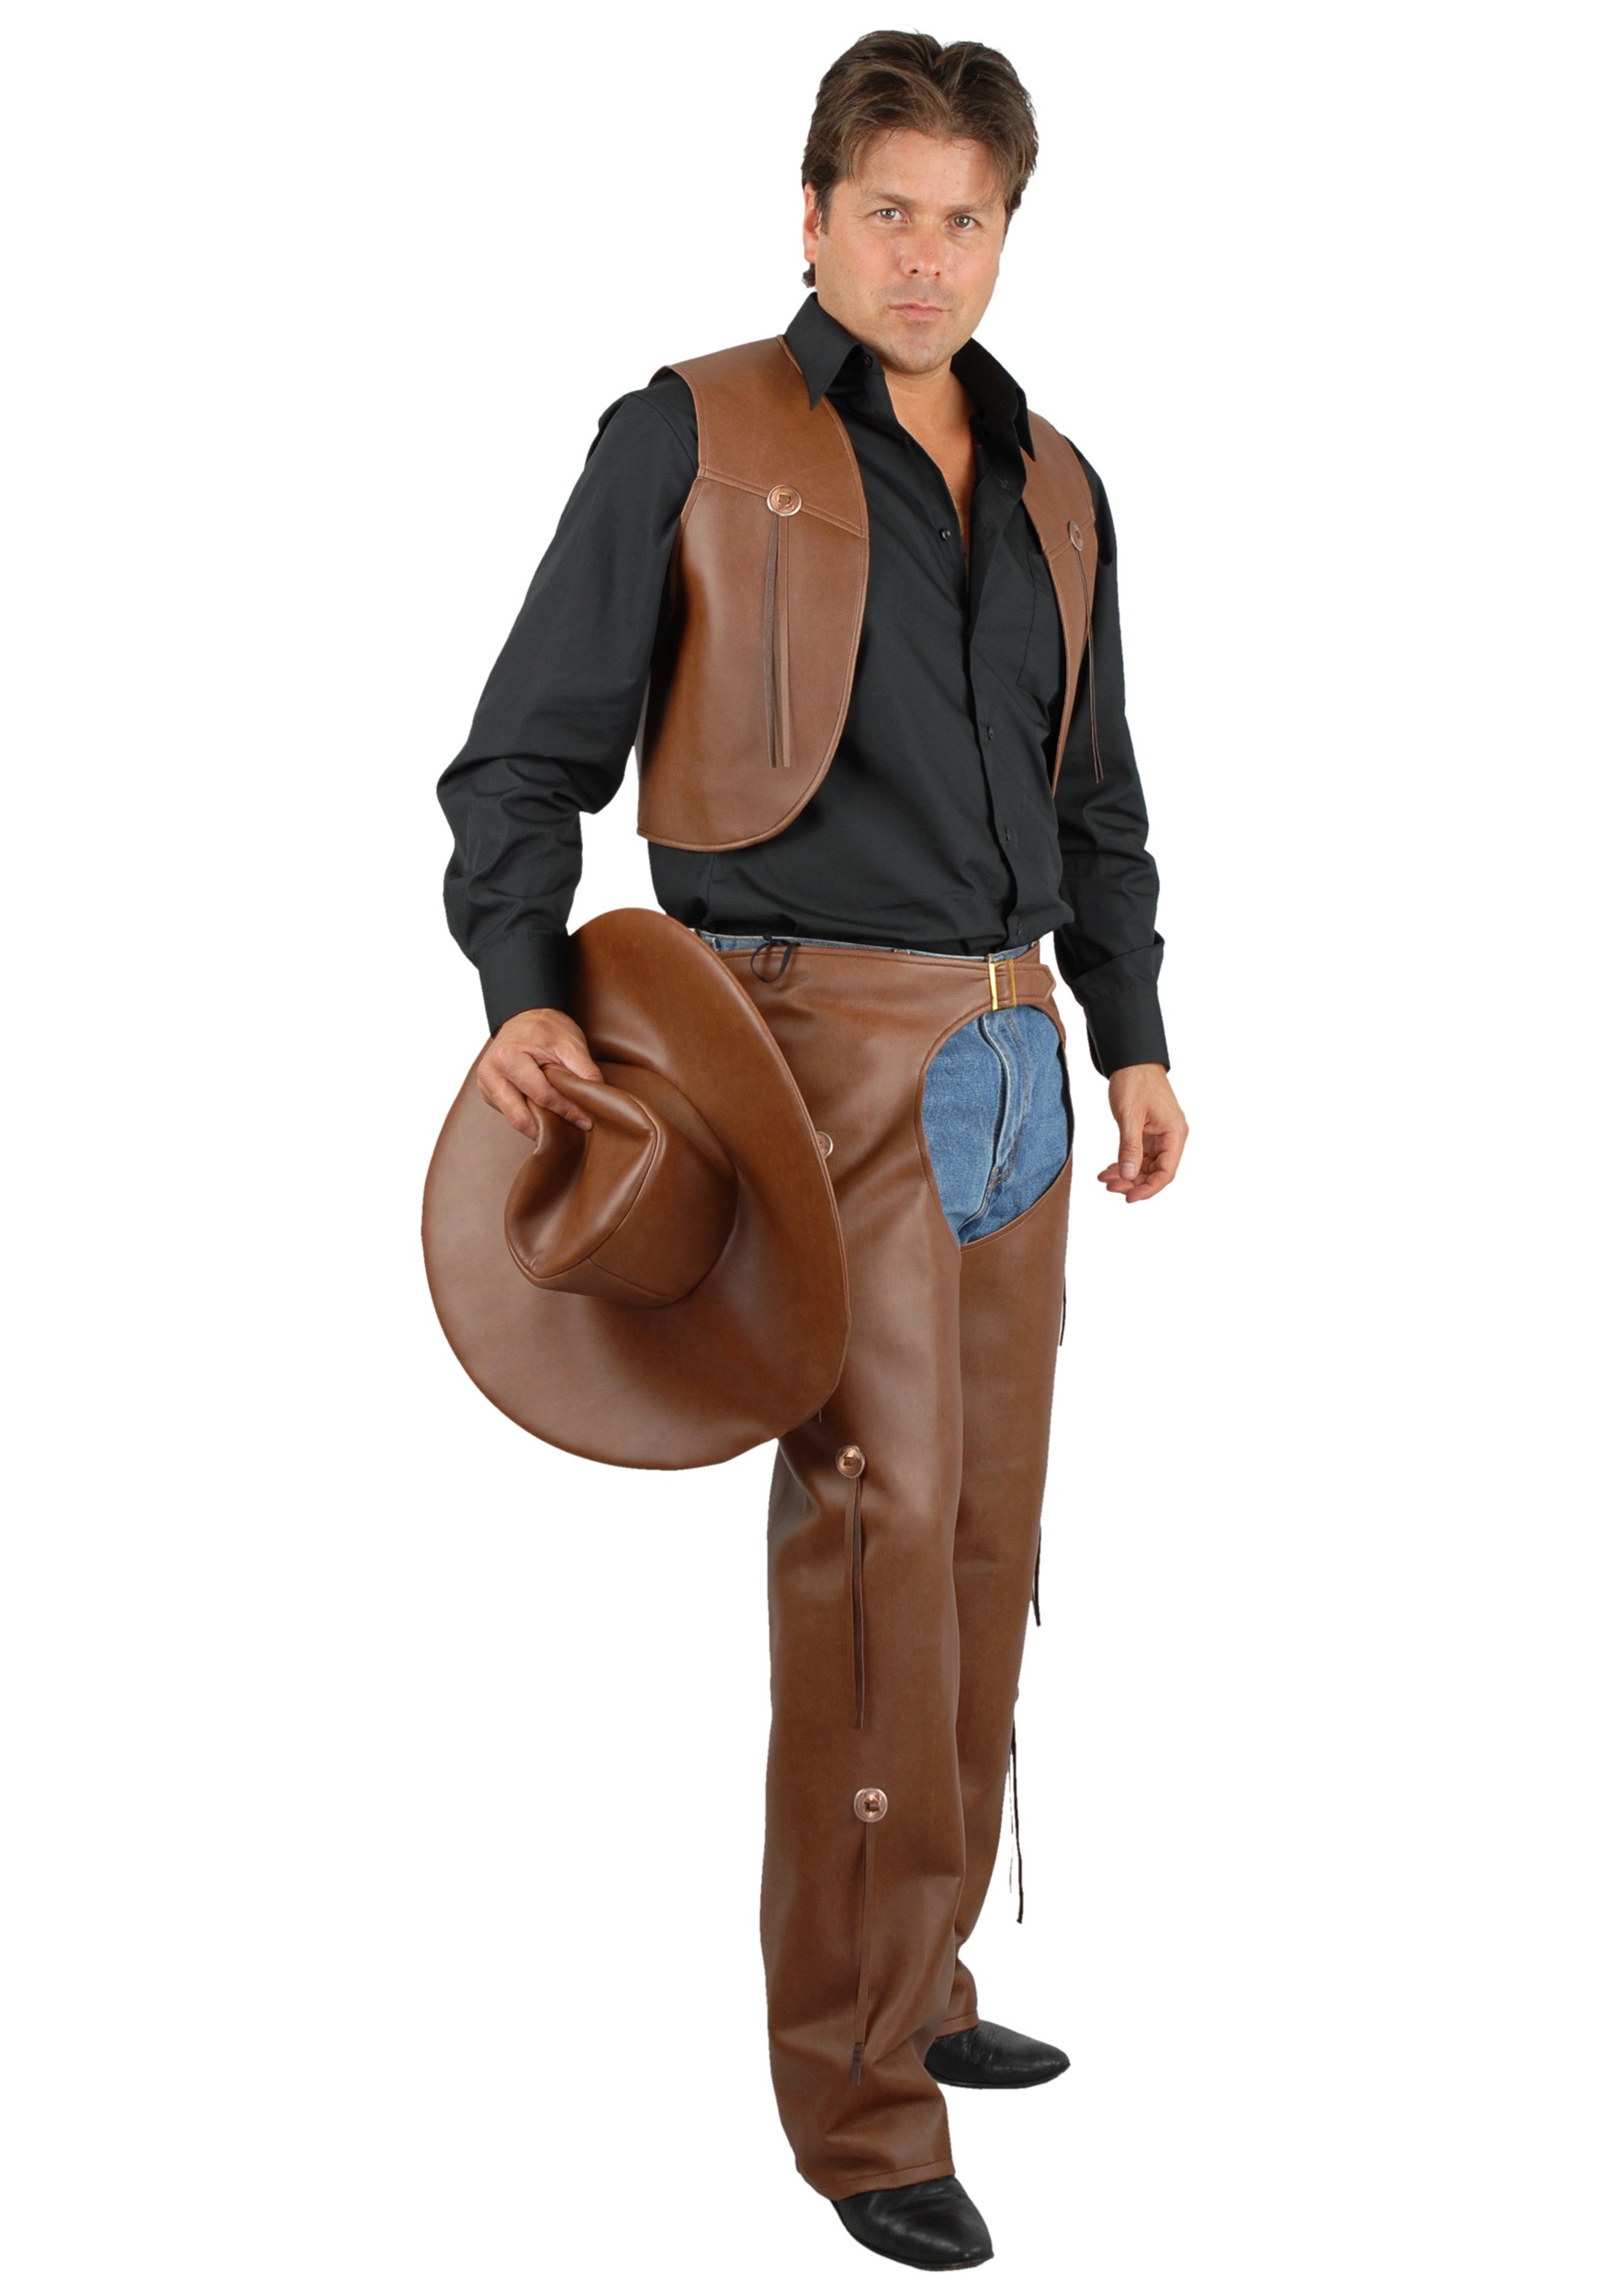 Mens Adult Western Cowboy Fancy Dress Costume Wild West Chaps S-XL New 